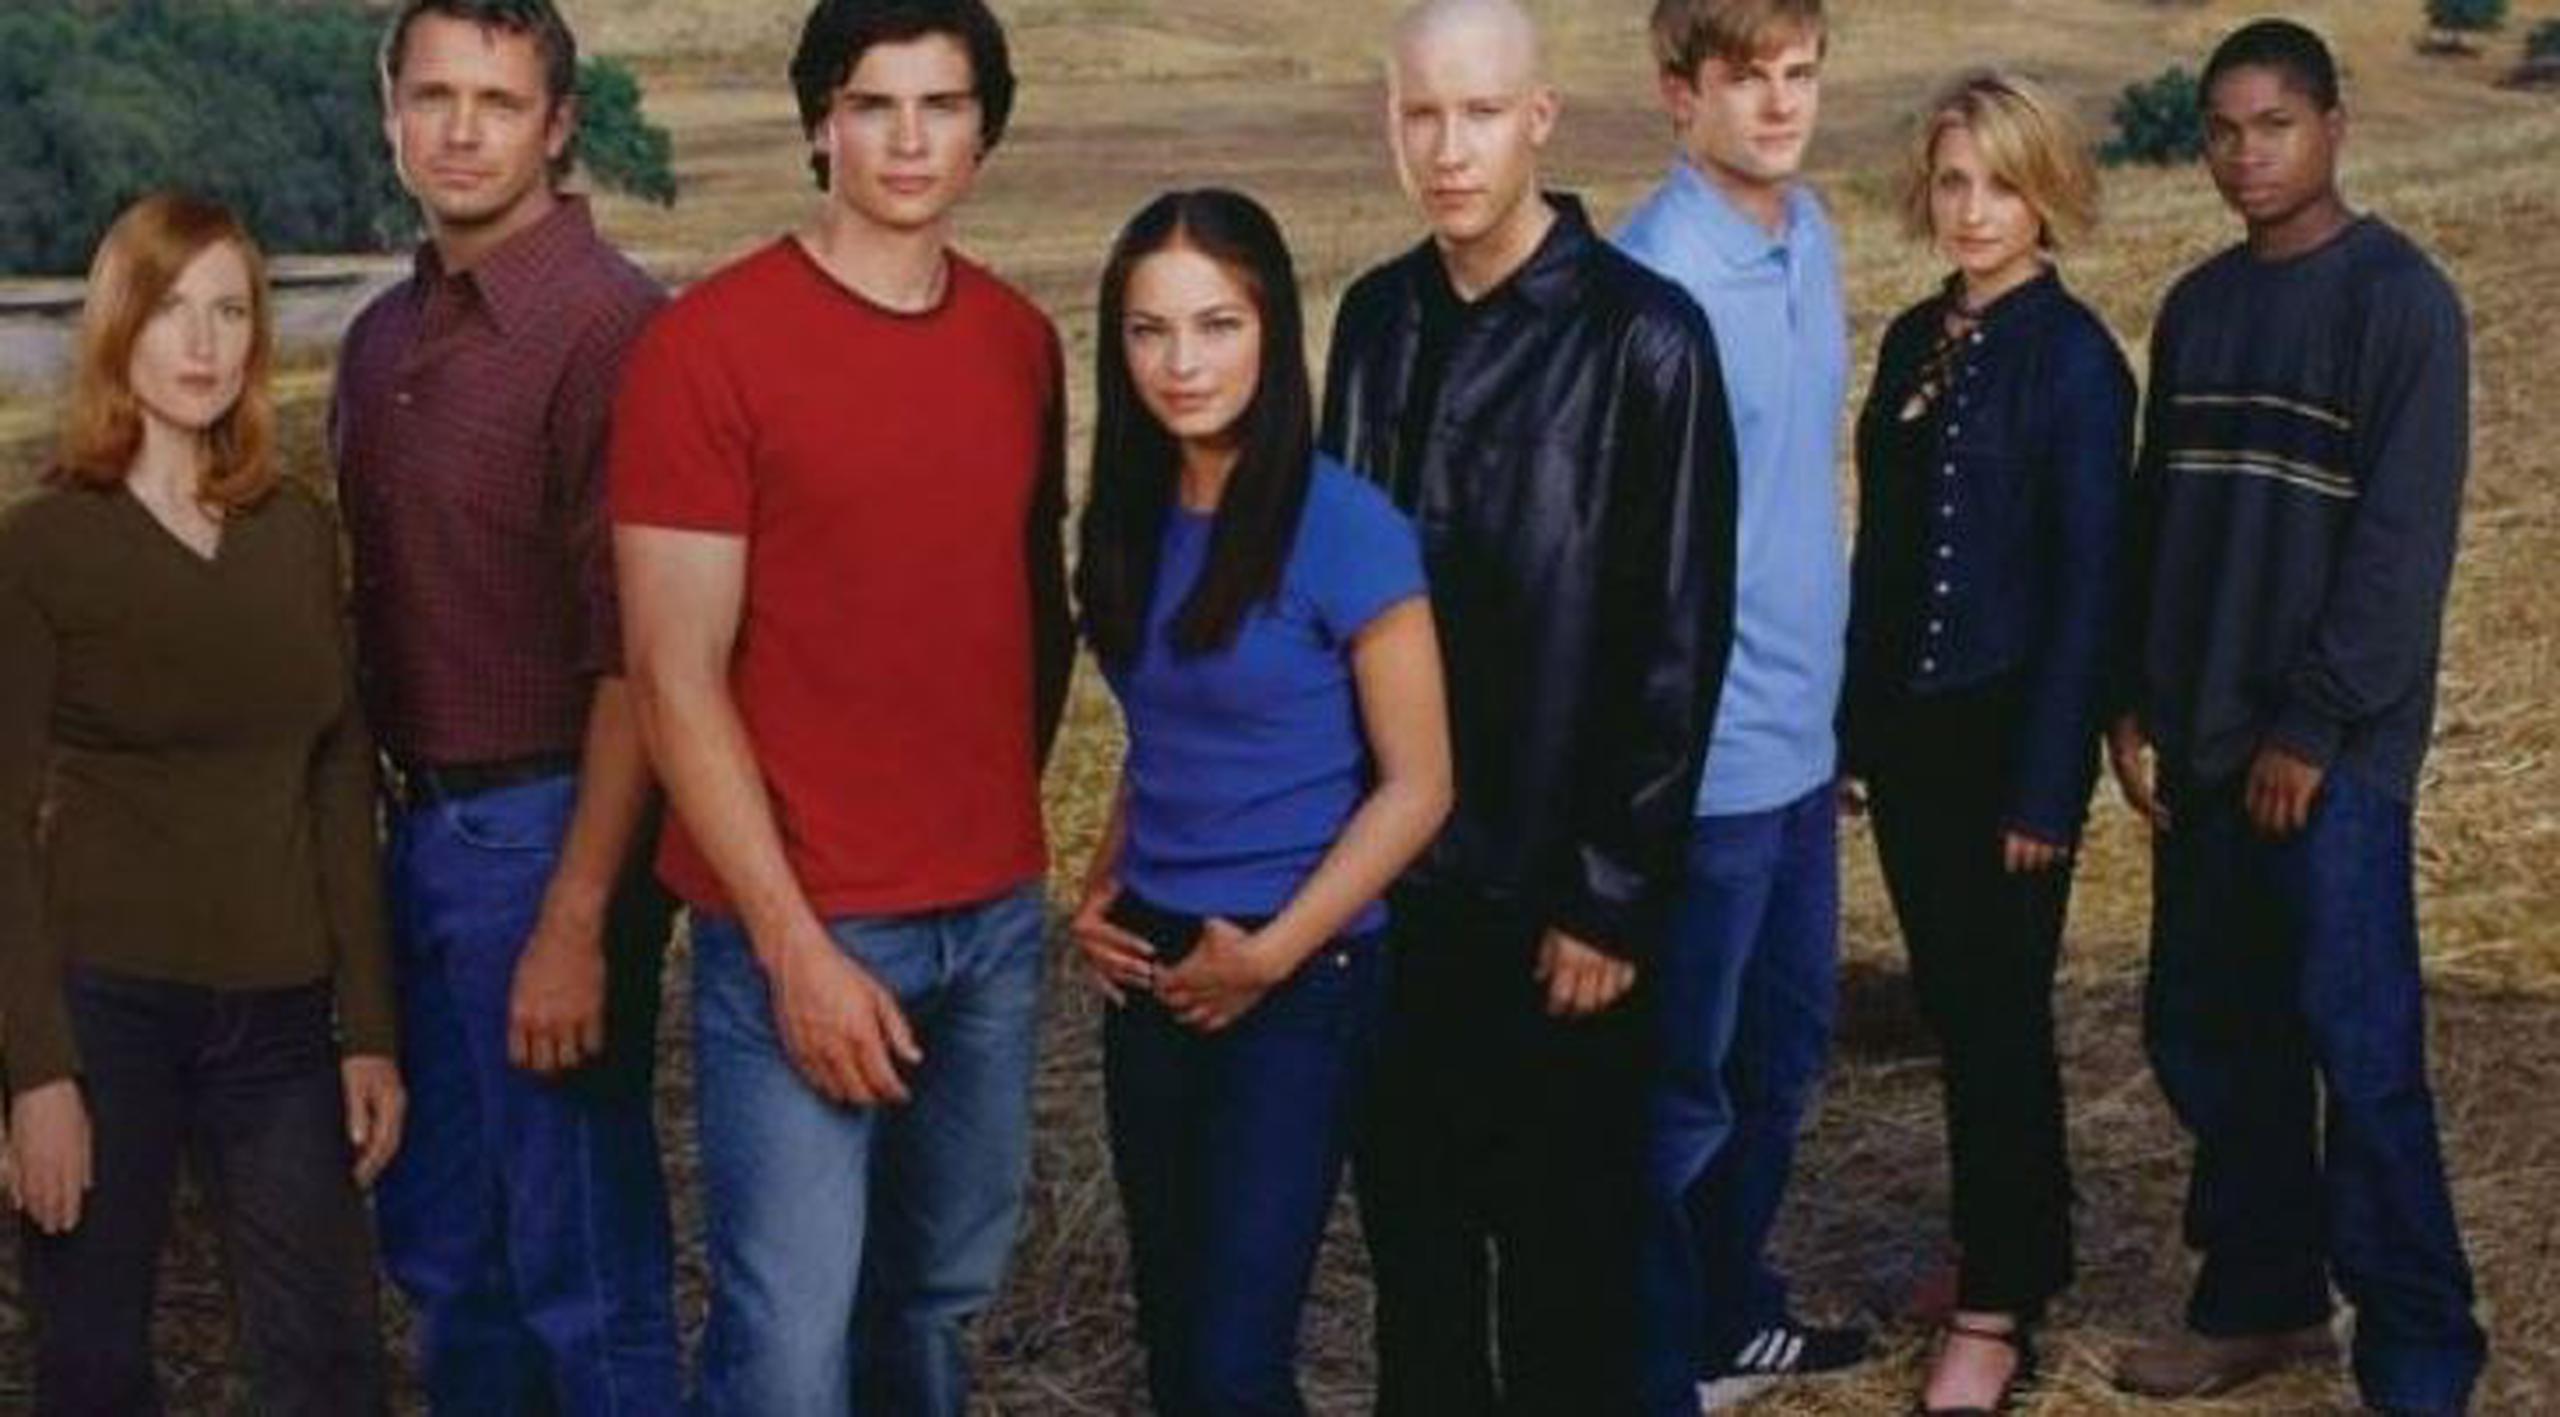 Elenco de la serie de "Smallville". (Captura)